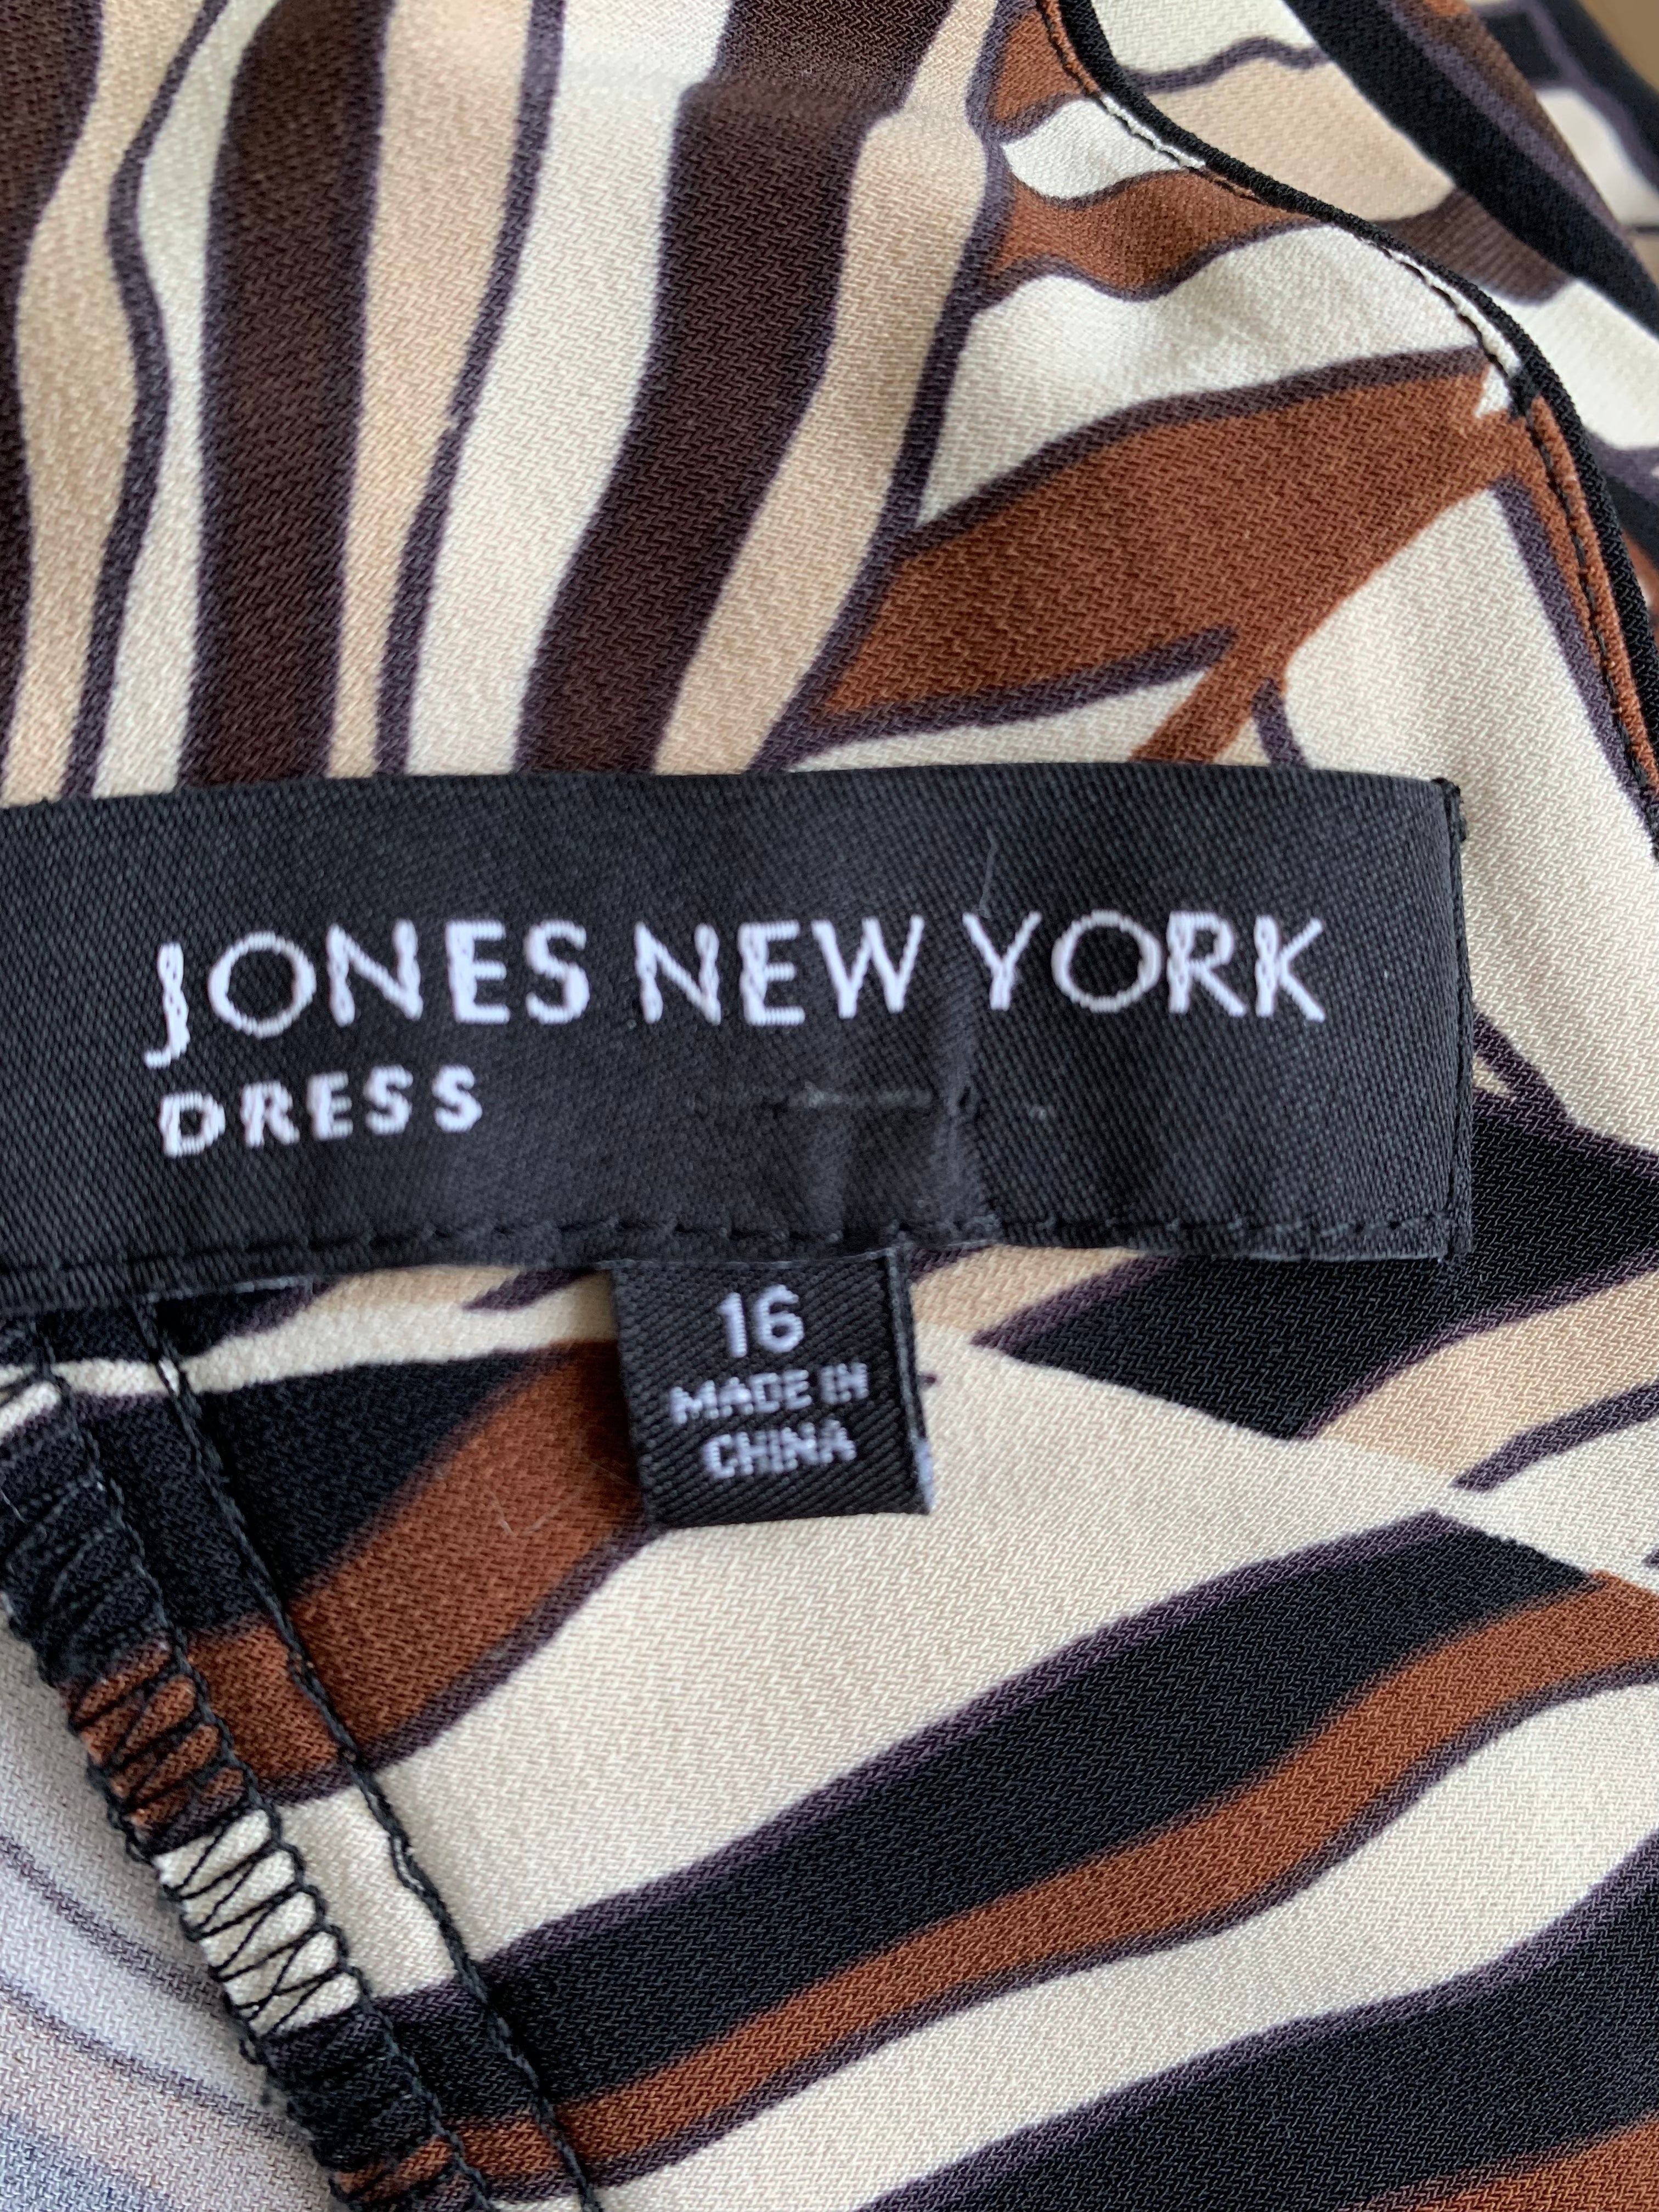 Jones New York Brown Print Stretch Dress, 16